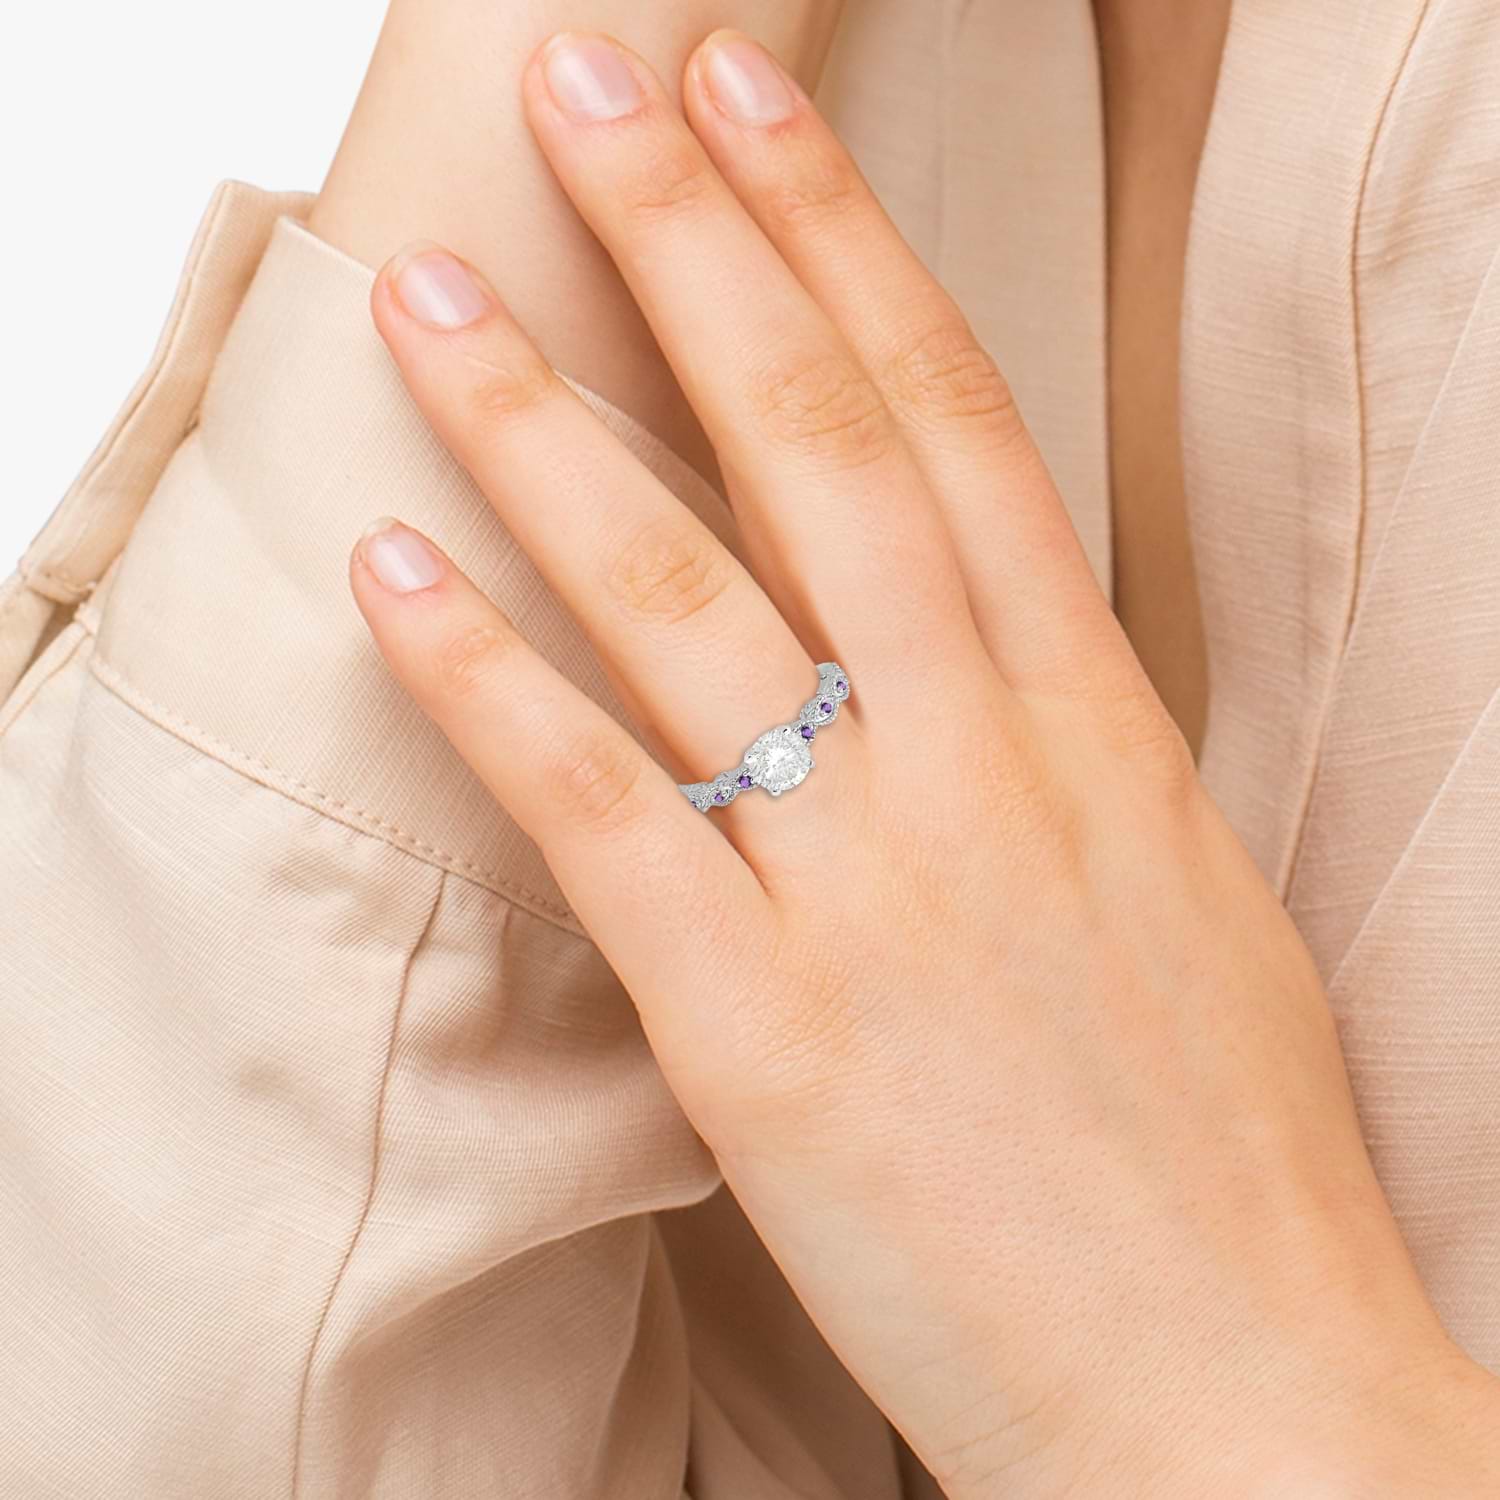 Vintage Diamond & Amethyst Engagement Ring 14k White Gold 1.50ct